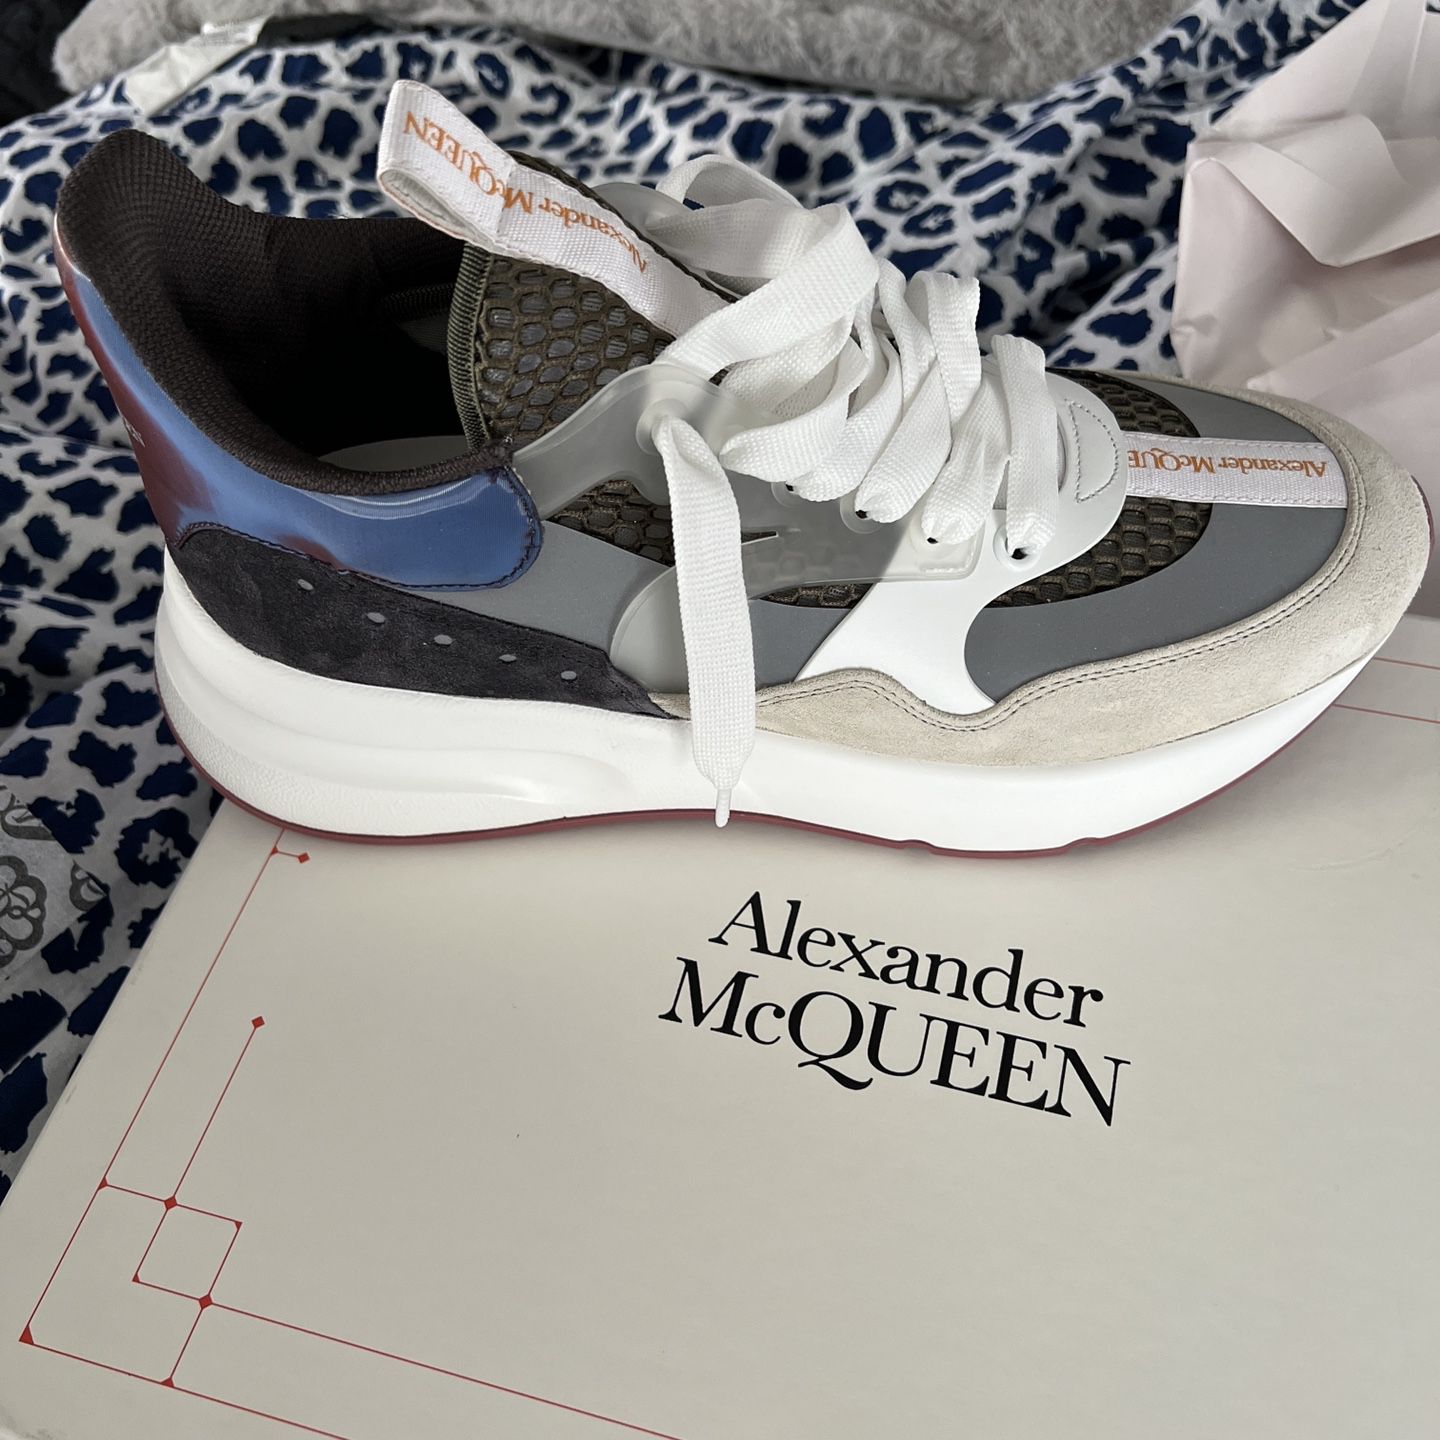 Sneakers Alexander McQueen for Sale in Las Vegas, NV - OfferUp